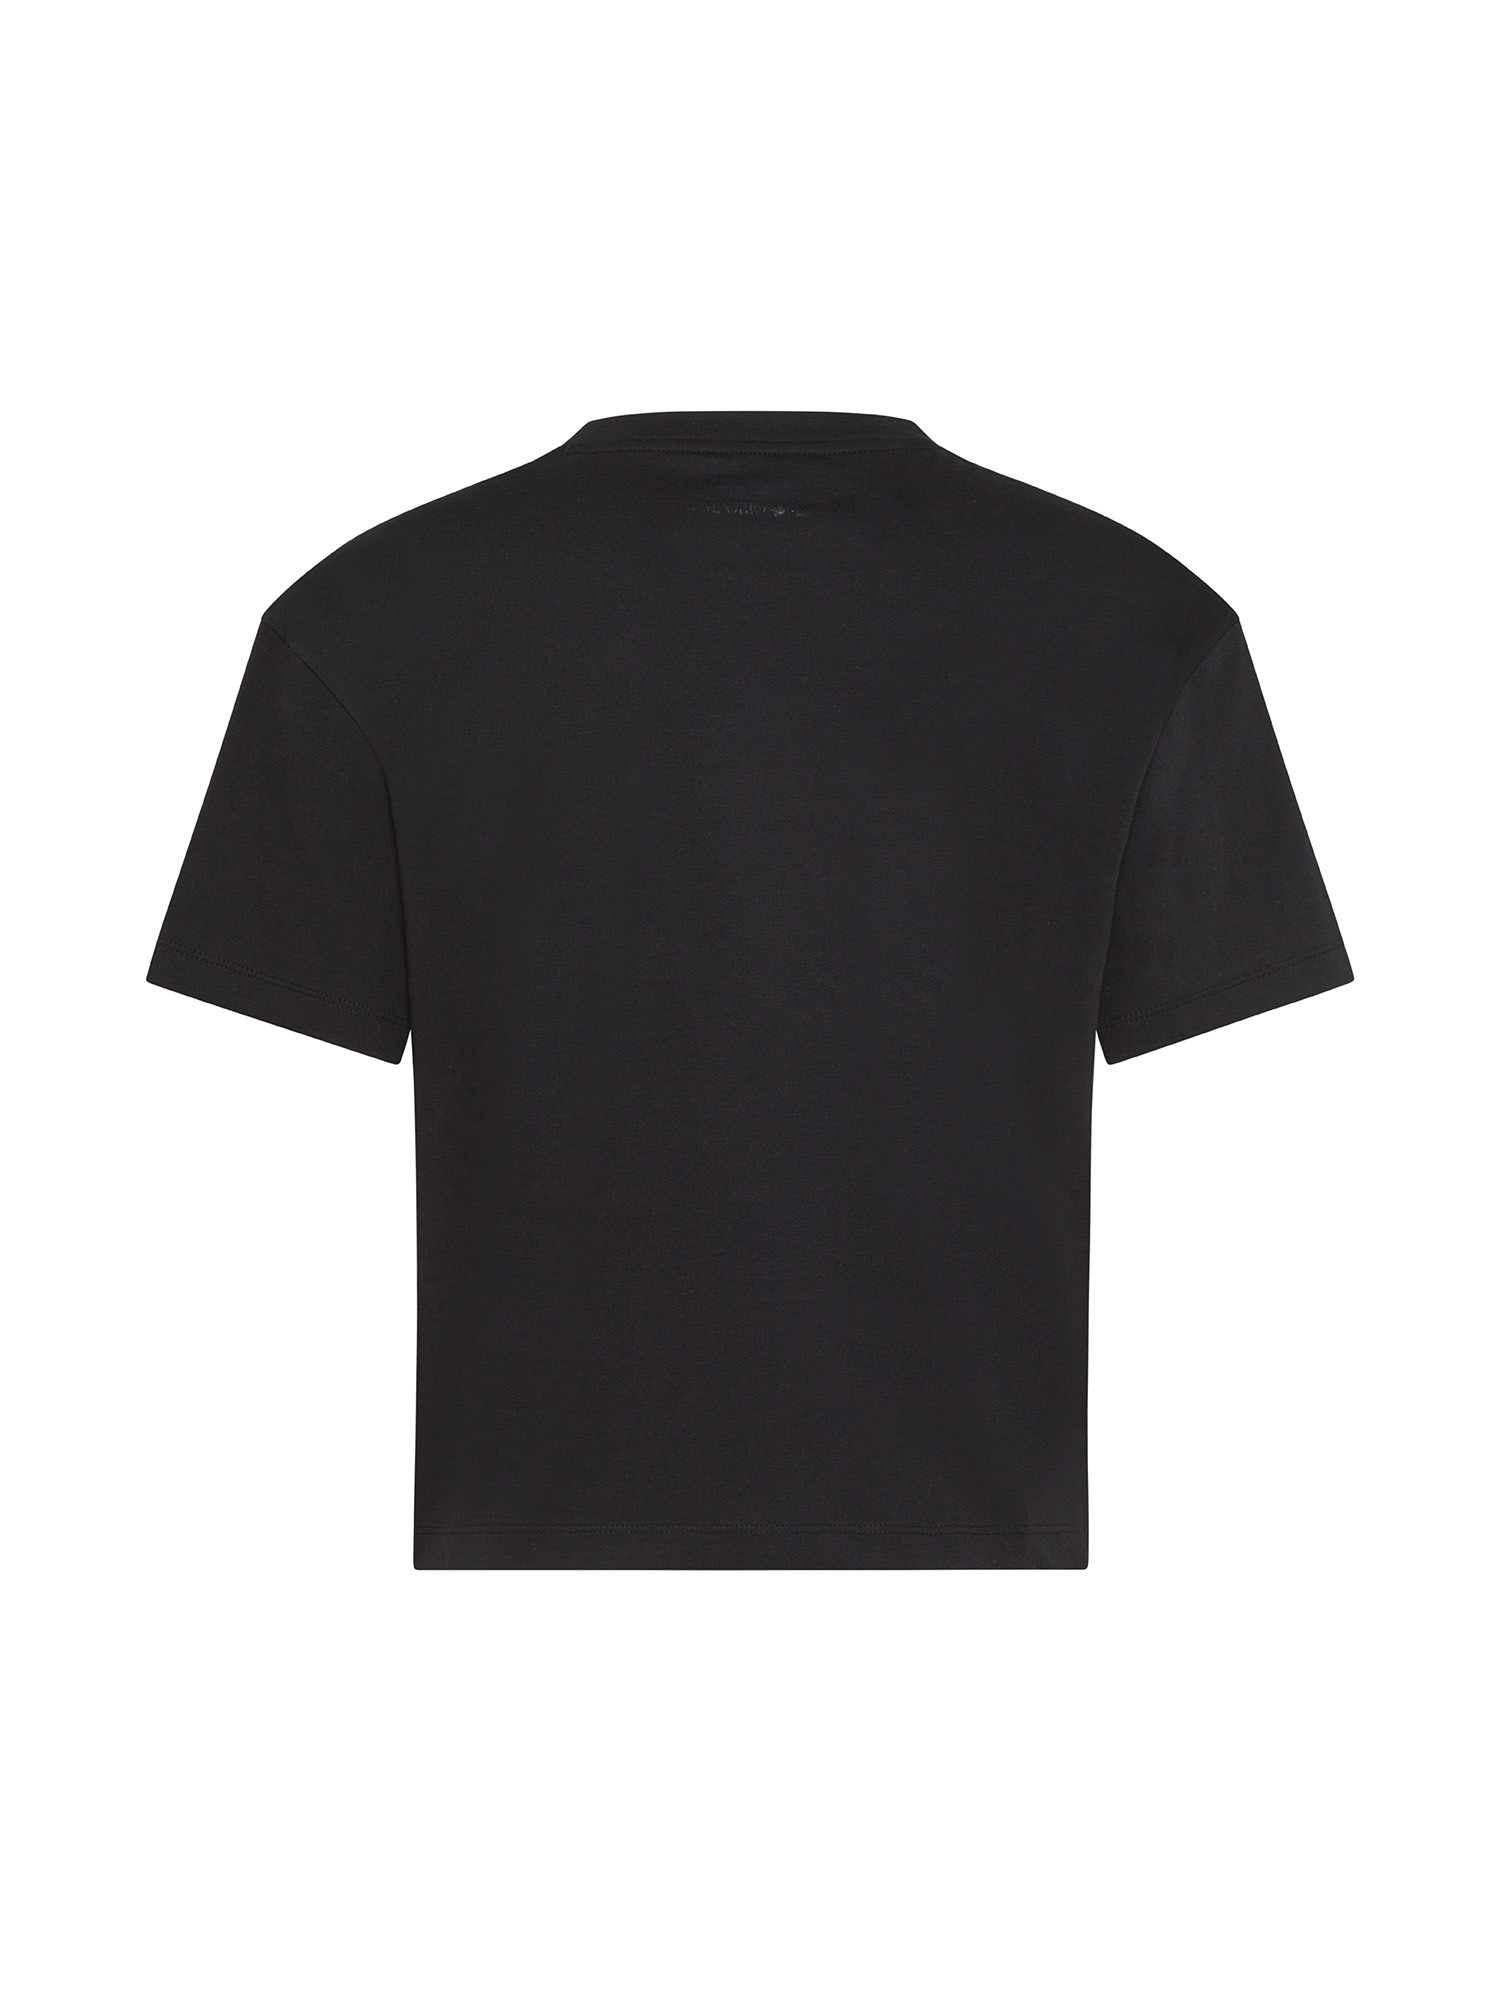 Emporio Armani Print T-shirt - nero/black 